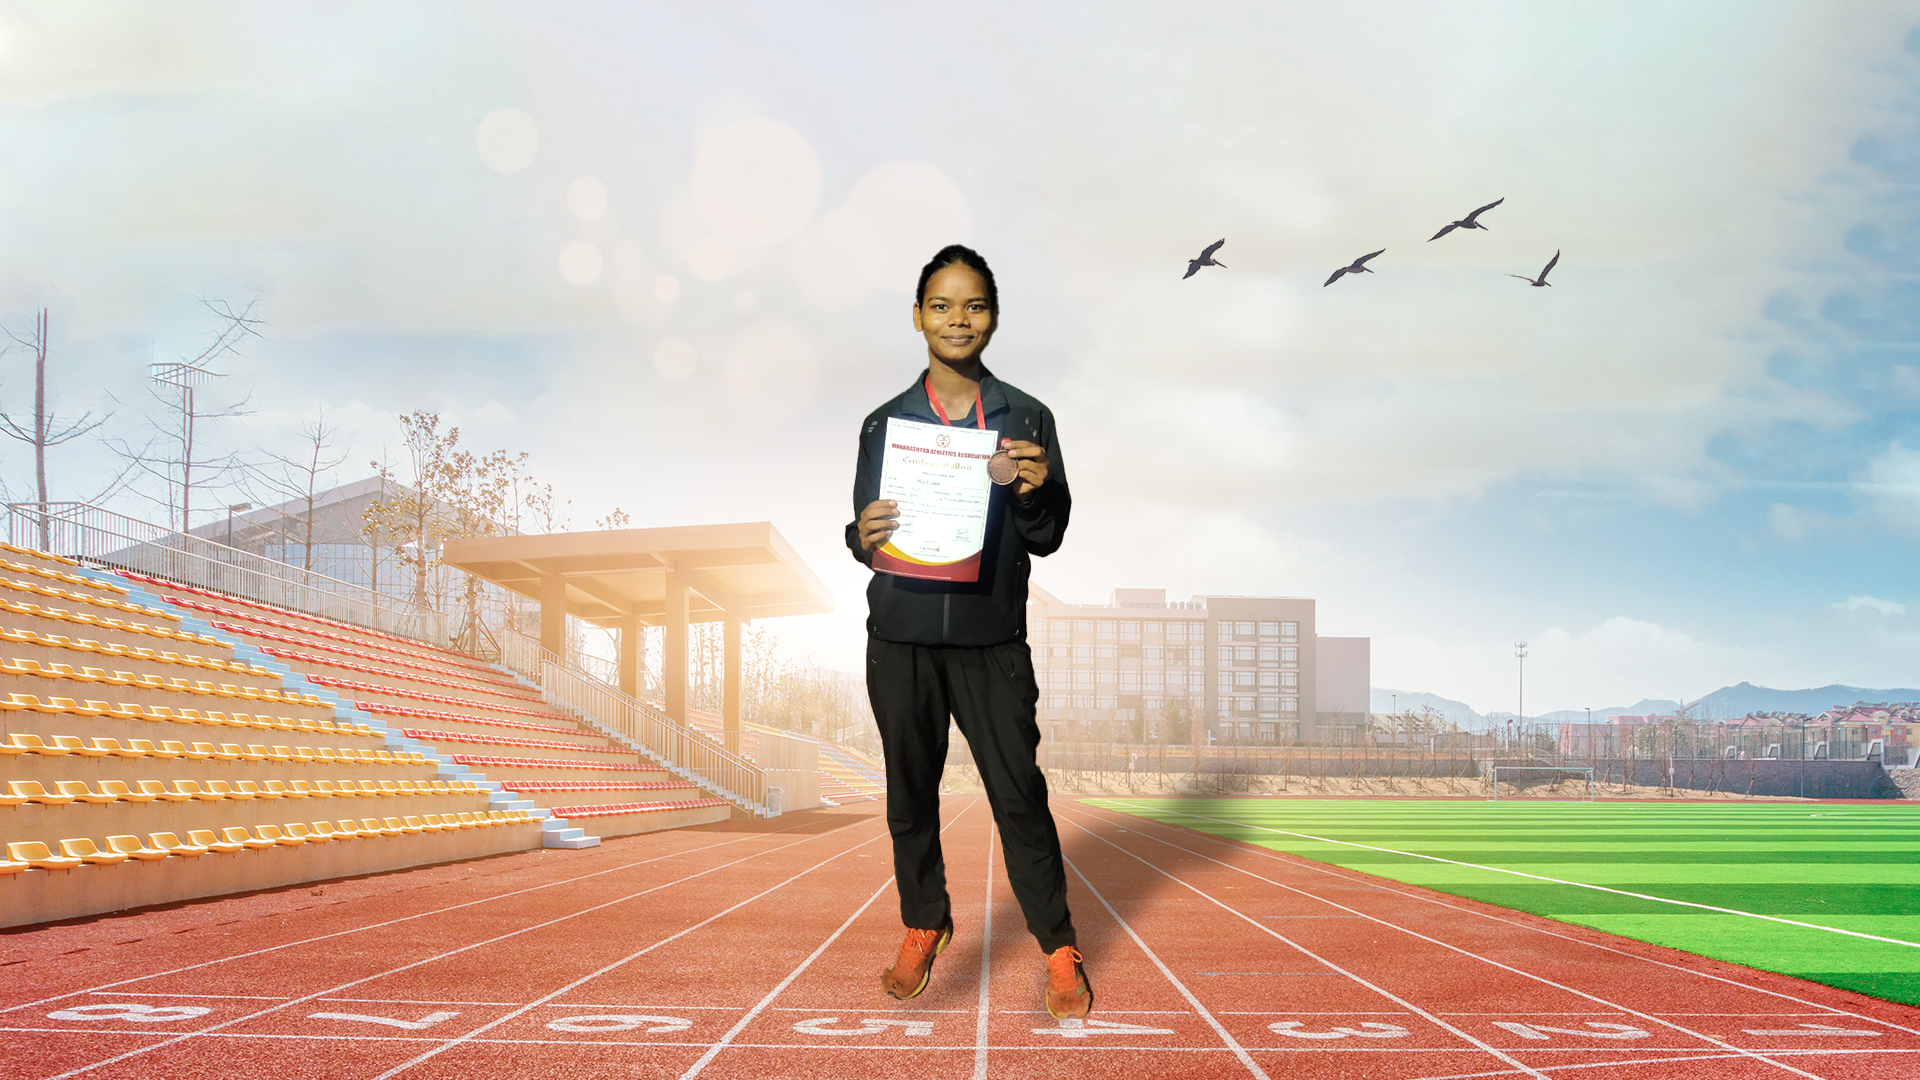 Essar Foundation supports rising athlete Priya Gupta to pursue her Olympic dream